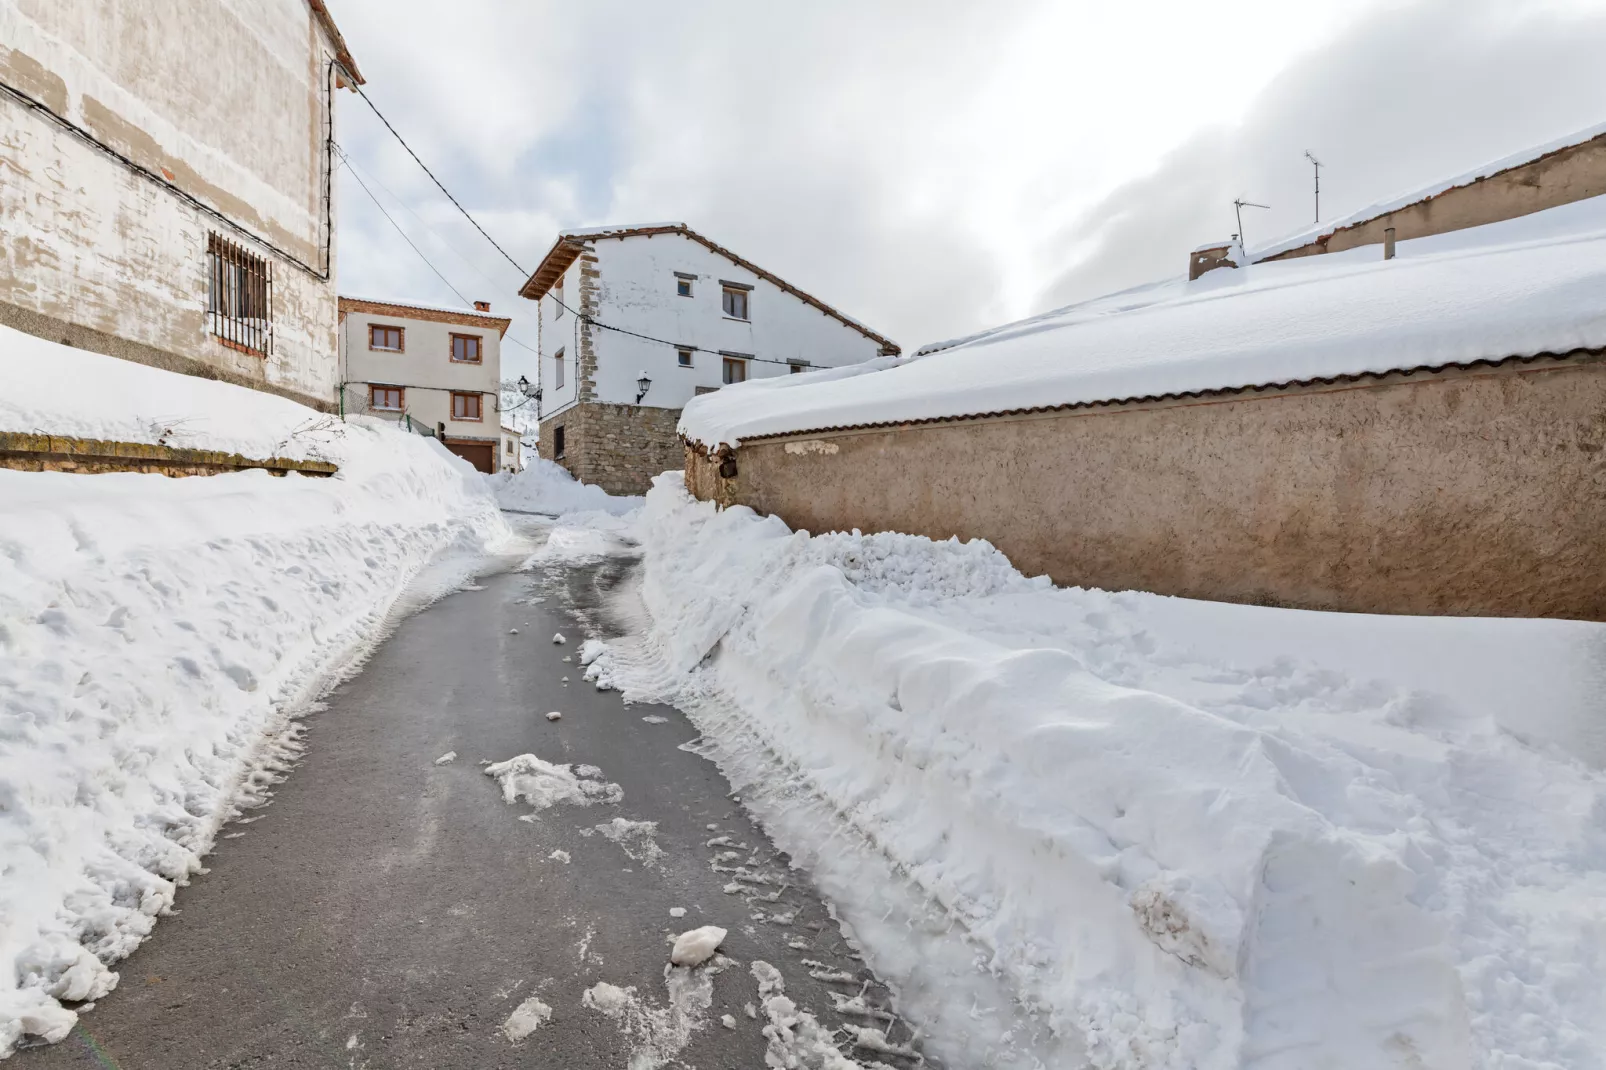 Apartamentos Sierra de Gudar-Gebied winter 1km